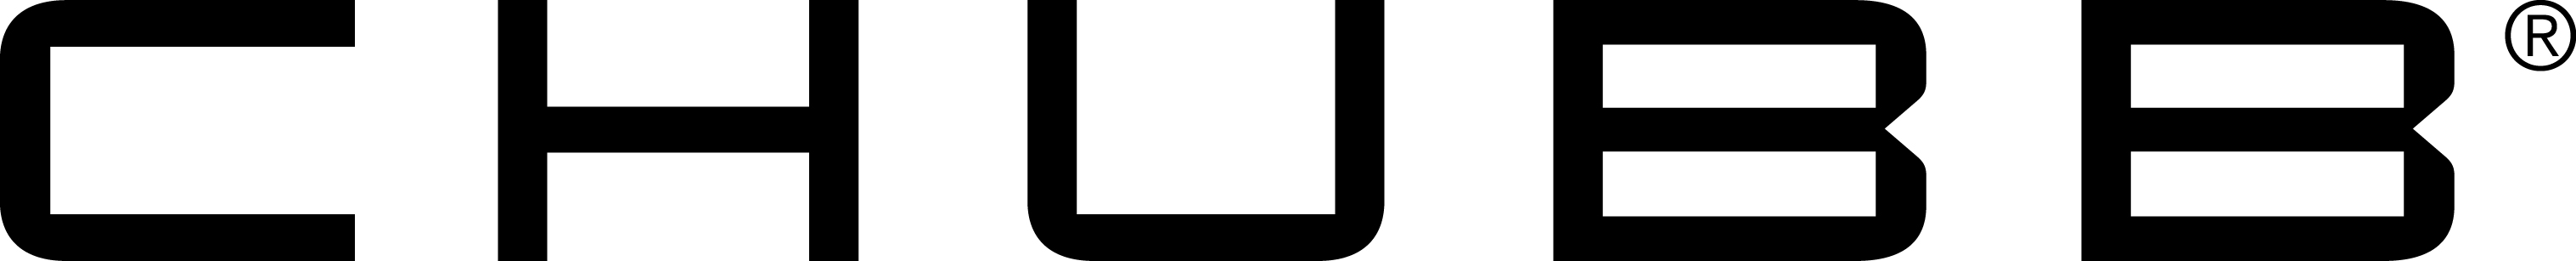 CHUBB_Logo_Black_RBG.jpg